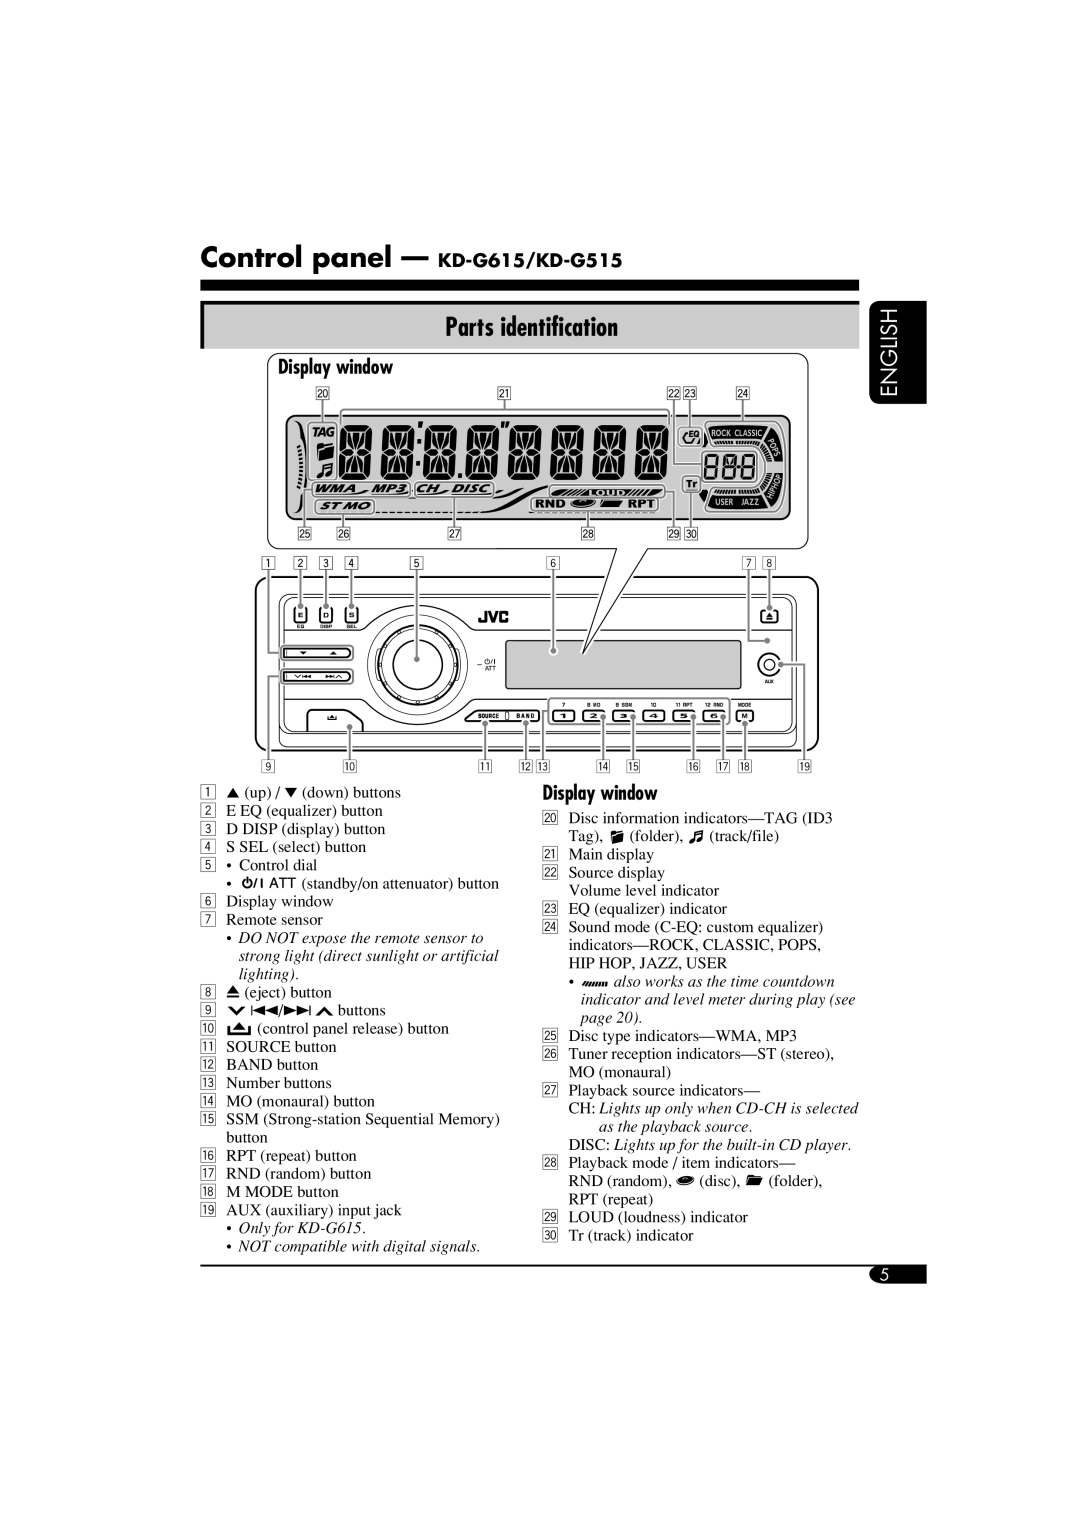 JVC manual Control panel - KD-G615/KD-G515, Parts identification, Display window, English 